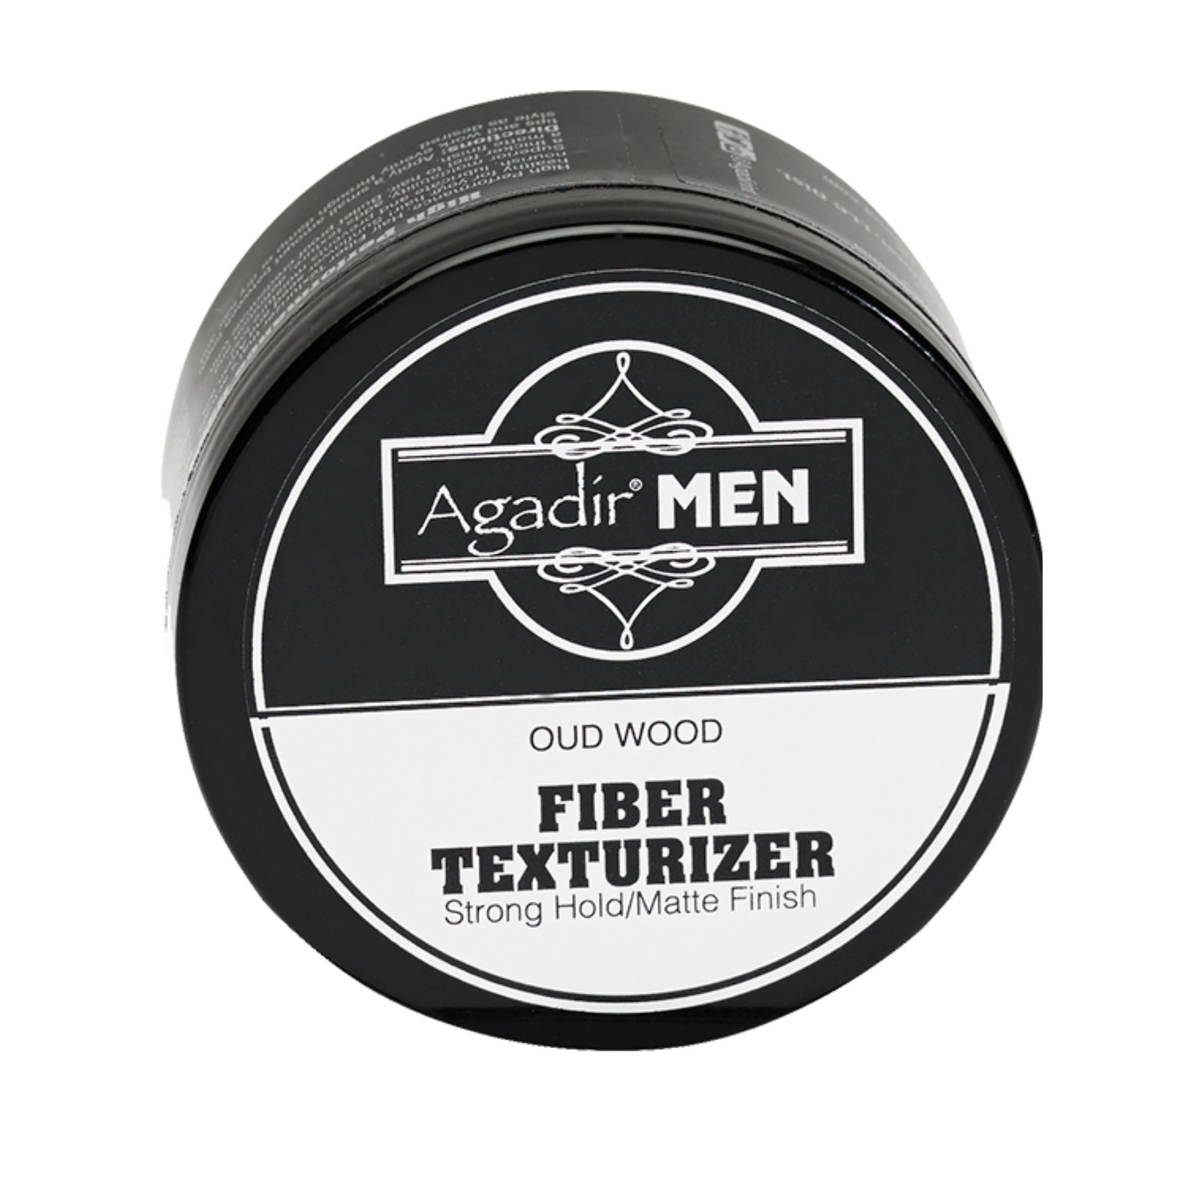 Fiber Texturizer - 3 oz.